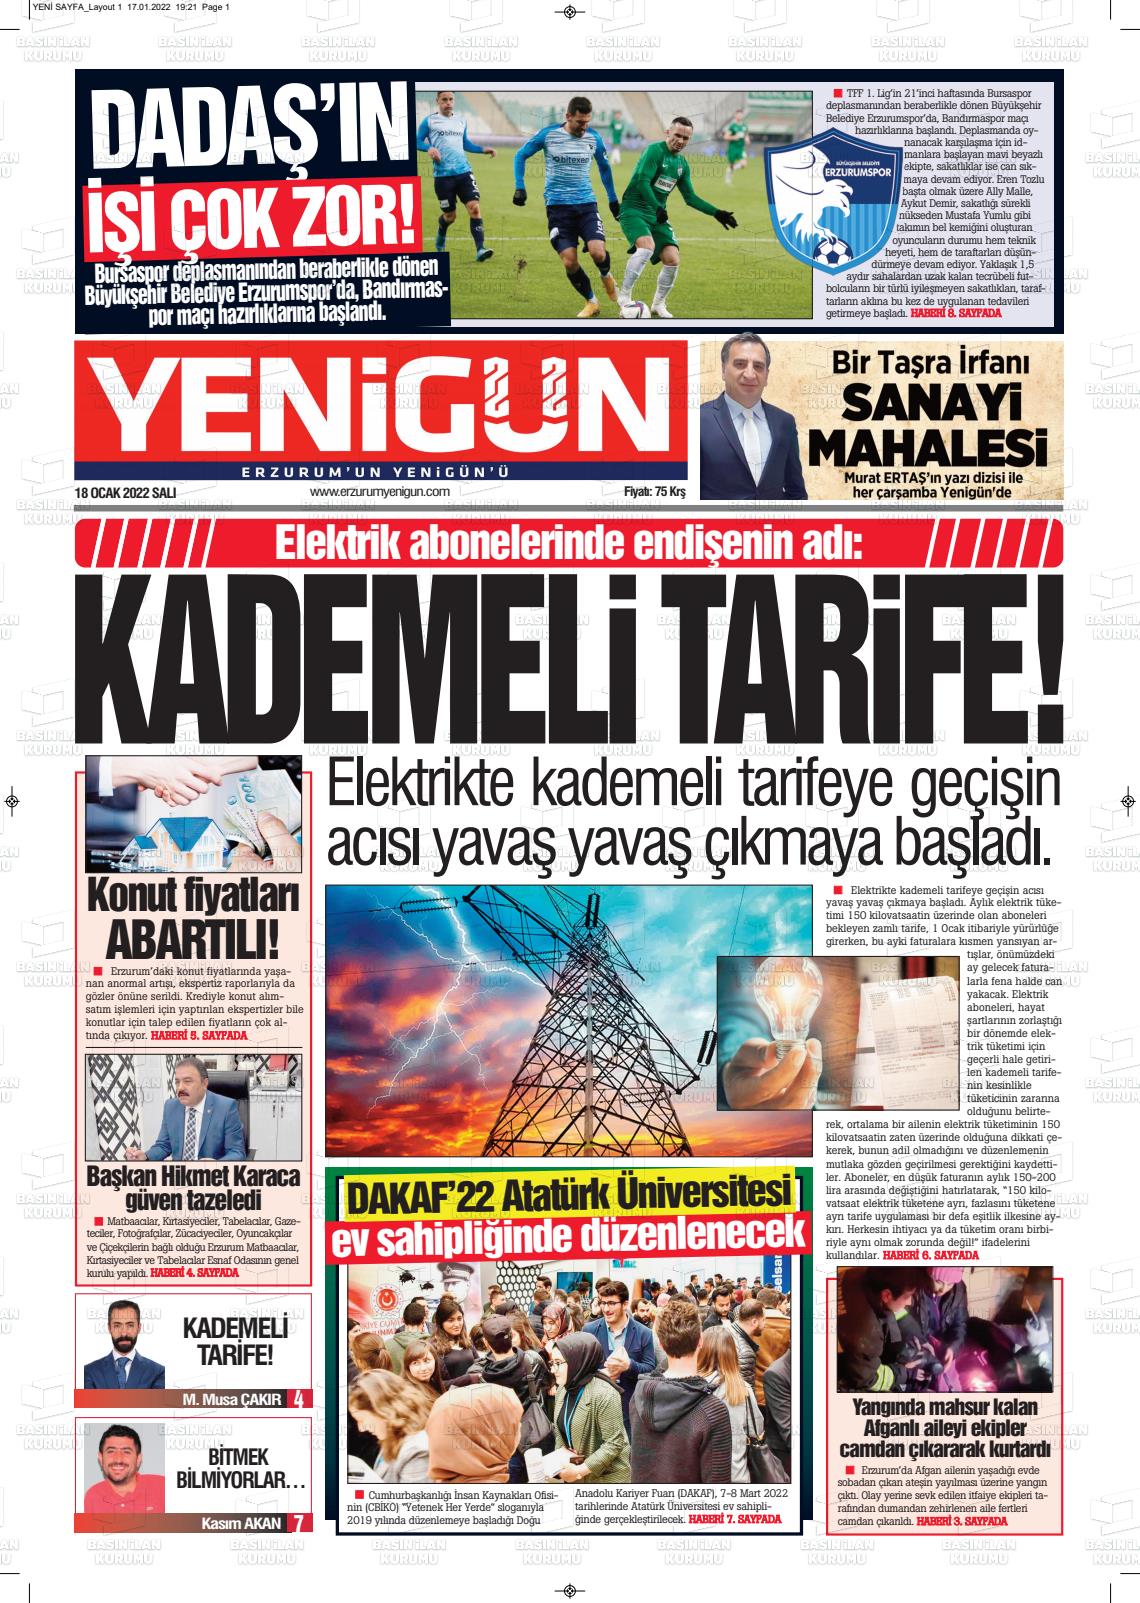 18 Ocak 2022 Erzurum Yenigün Gazete Manşeti